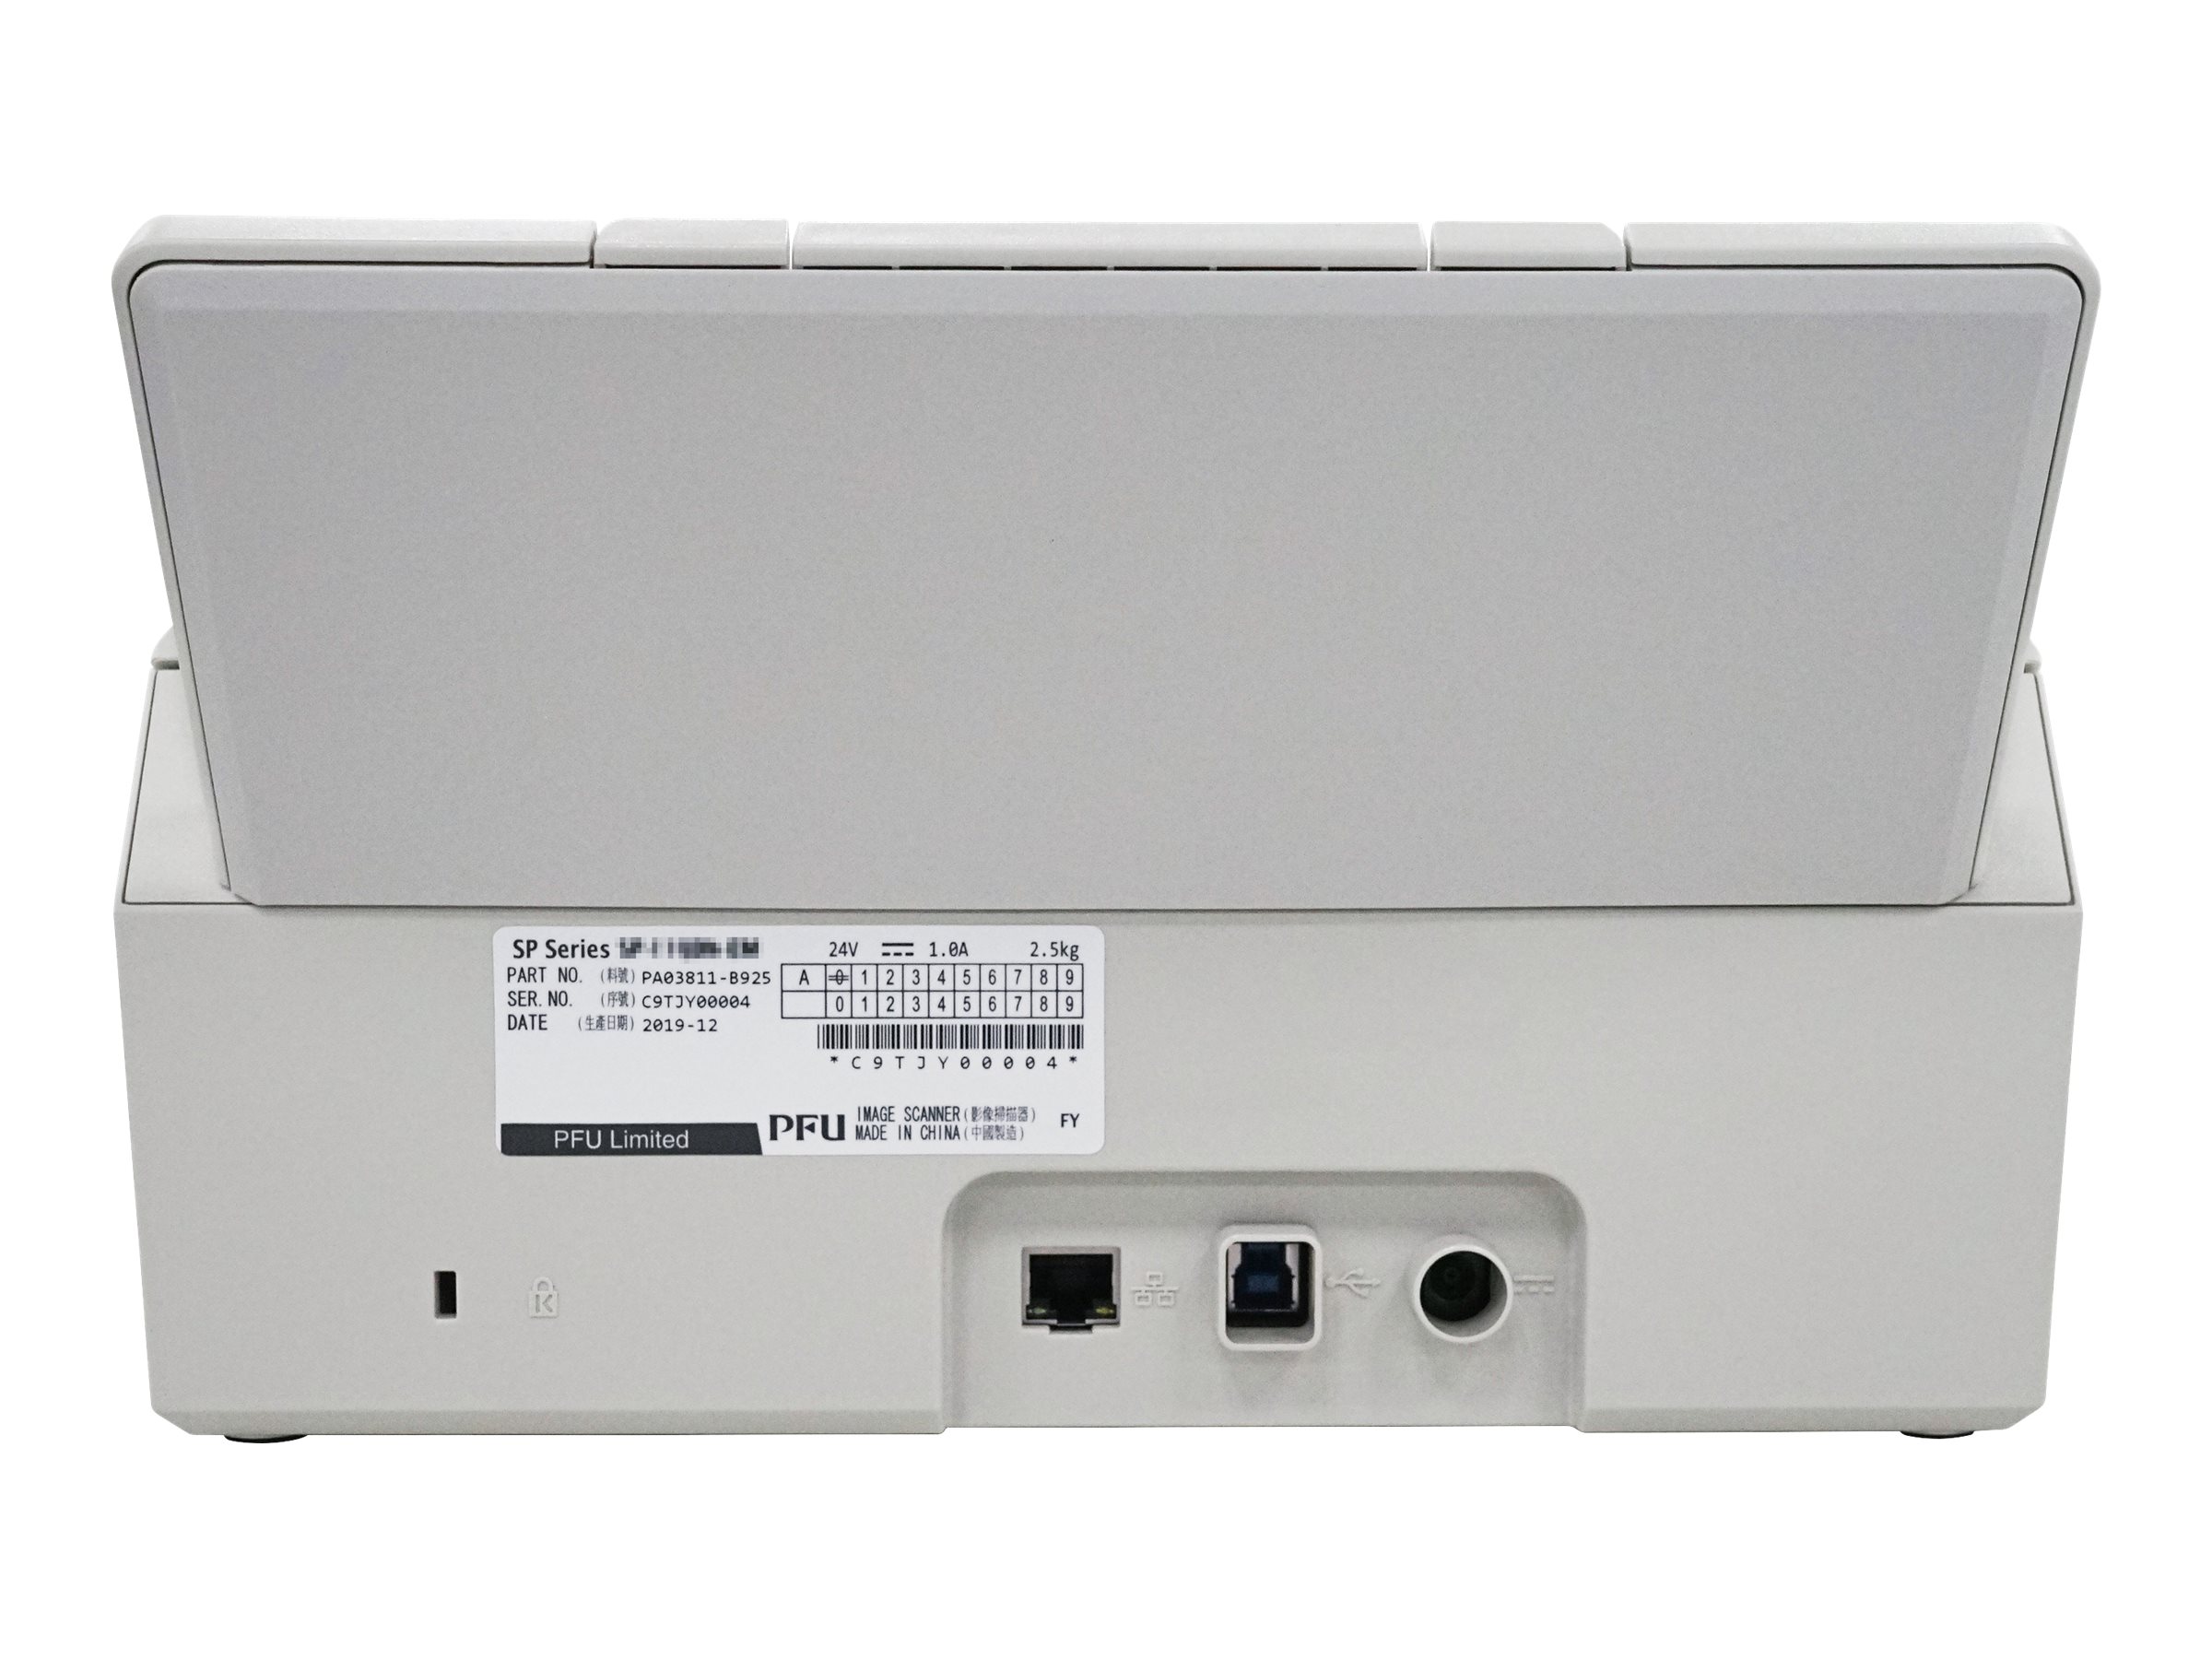 Fujitsu Ricoh SP-1130N - Dokumentenscanner - Dual CIS - Duplex - 216 x 355.6 mm - 600 dpi x 600 dpi - bis zu 30 Seiten/Min. (einfarbig)